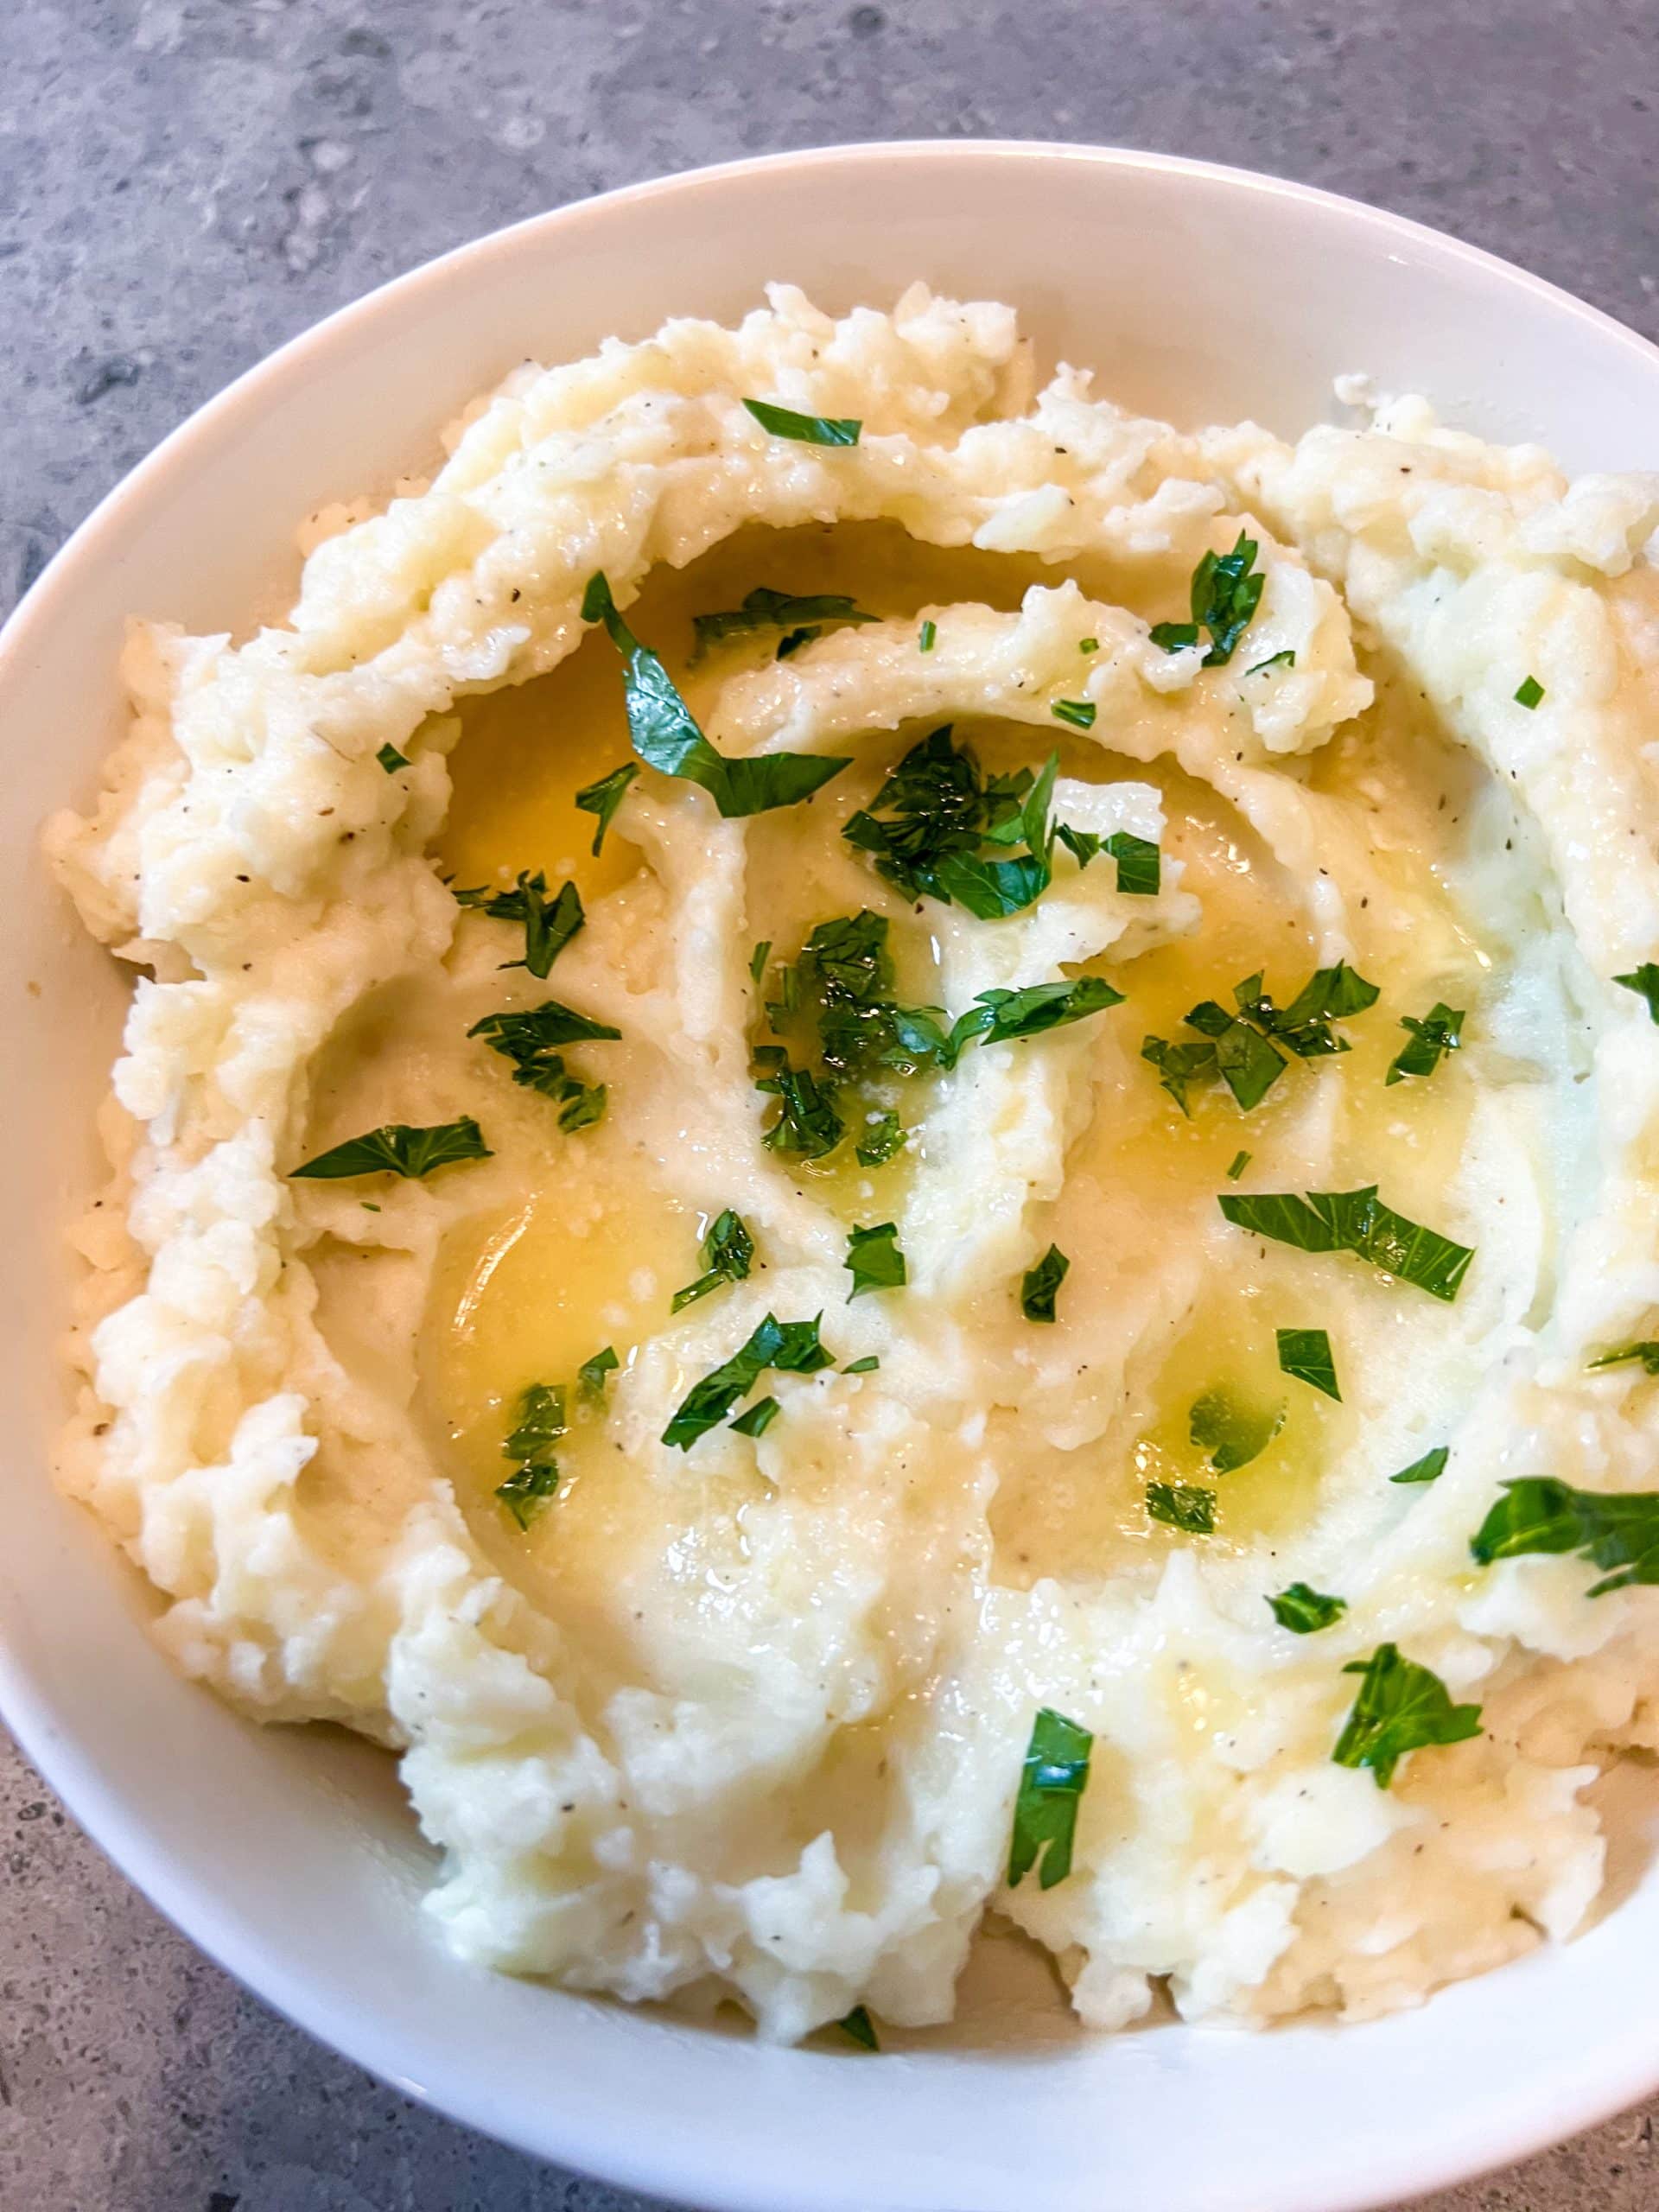 How to make mashed potatoes